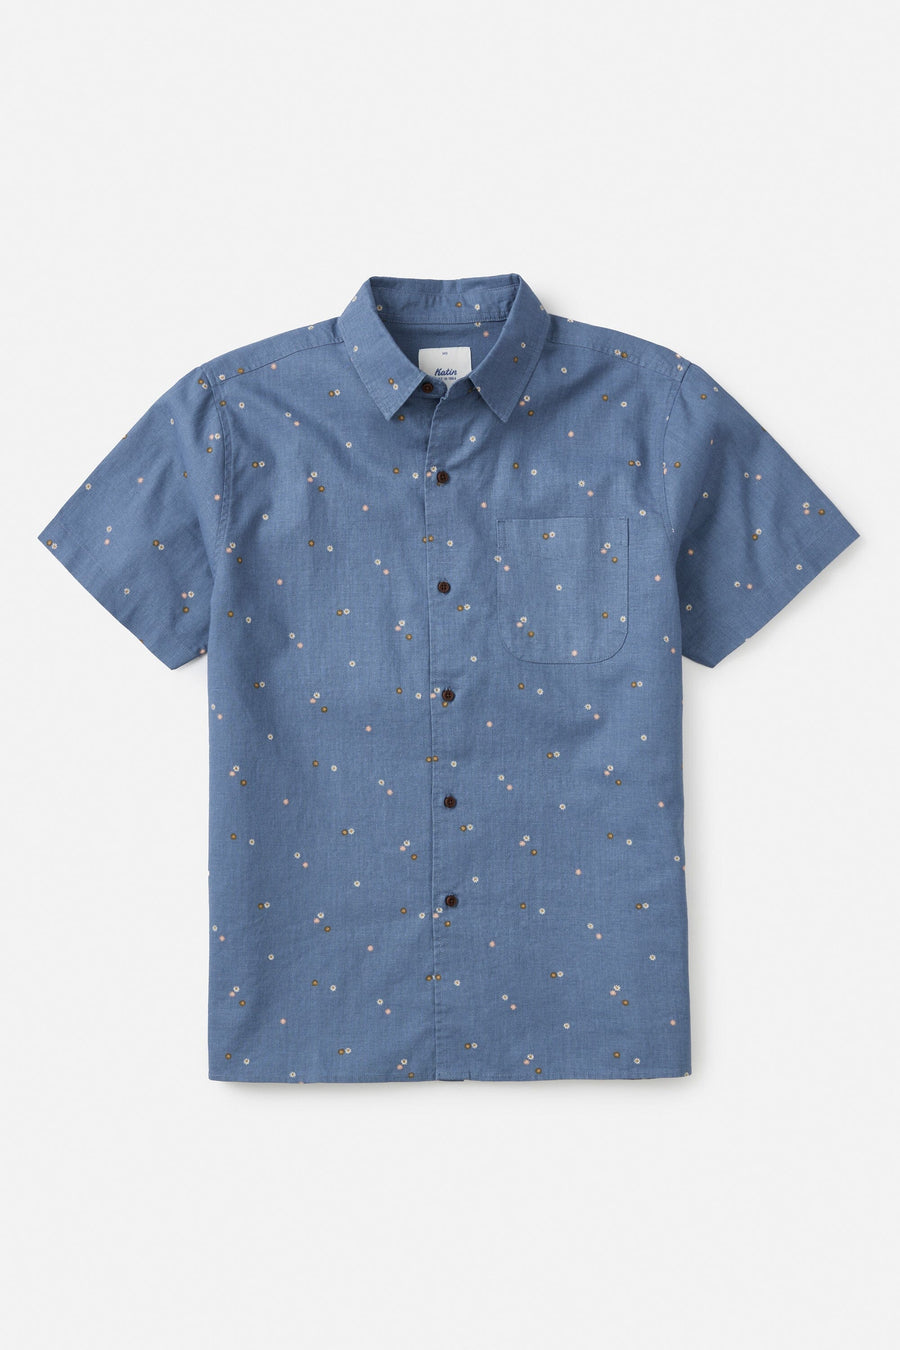 Men's Long-Sleeved Island Hopper Shirt - Large - Down River: Steam Blue